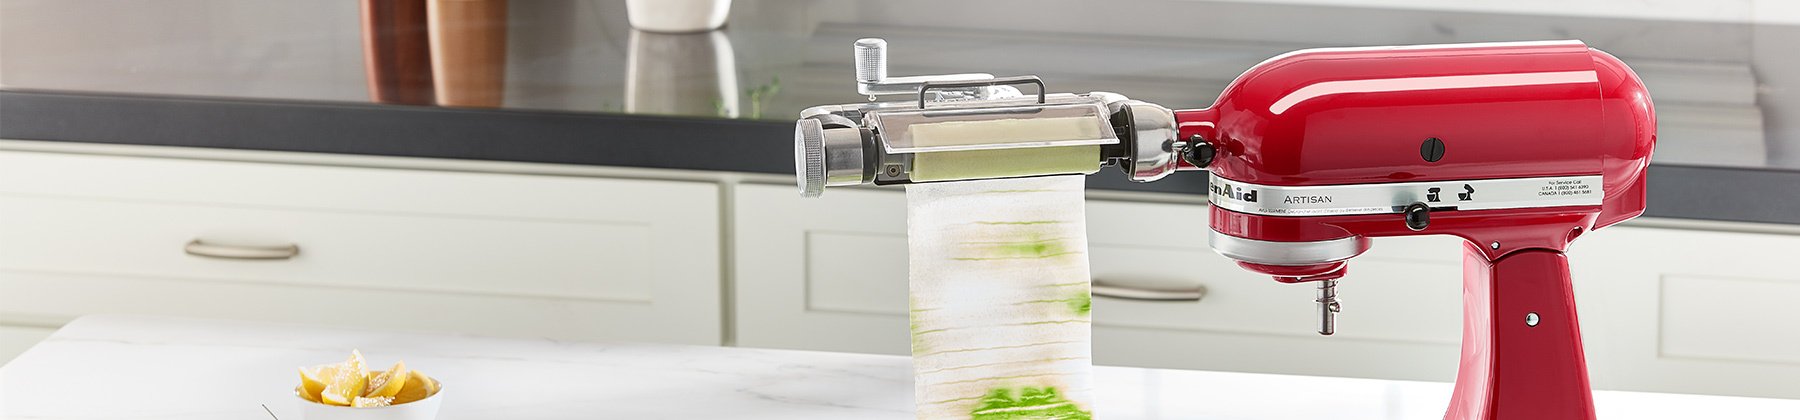 Photo of a KitchenAid Sheet Cutter Attachment cutting cucumber on a KitchenAid mixer.